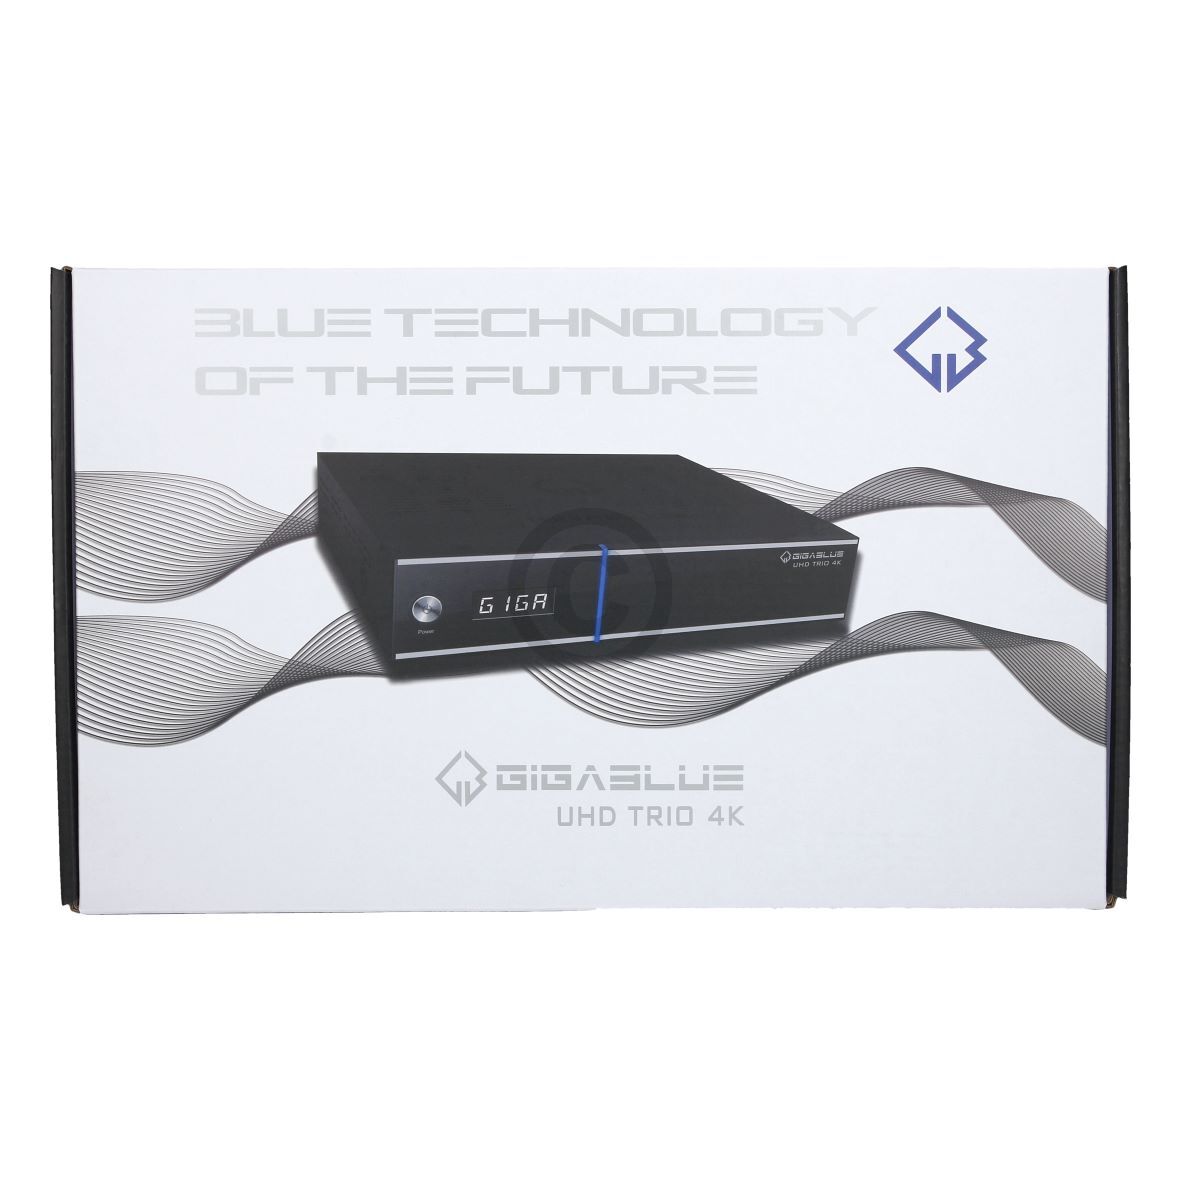 USB Wlan Stick Wifi GigaBlue GGBZU/006 600Mbit mit 2dBi Antenne 